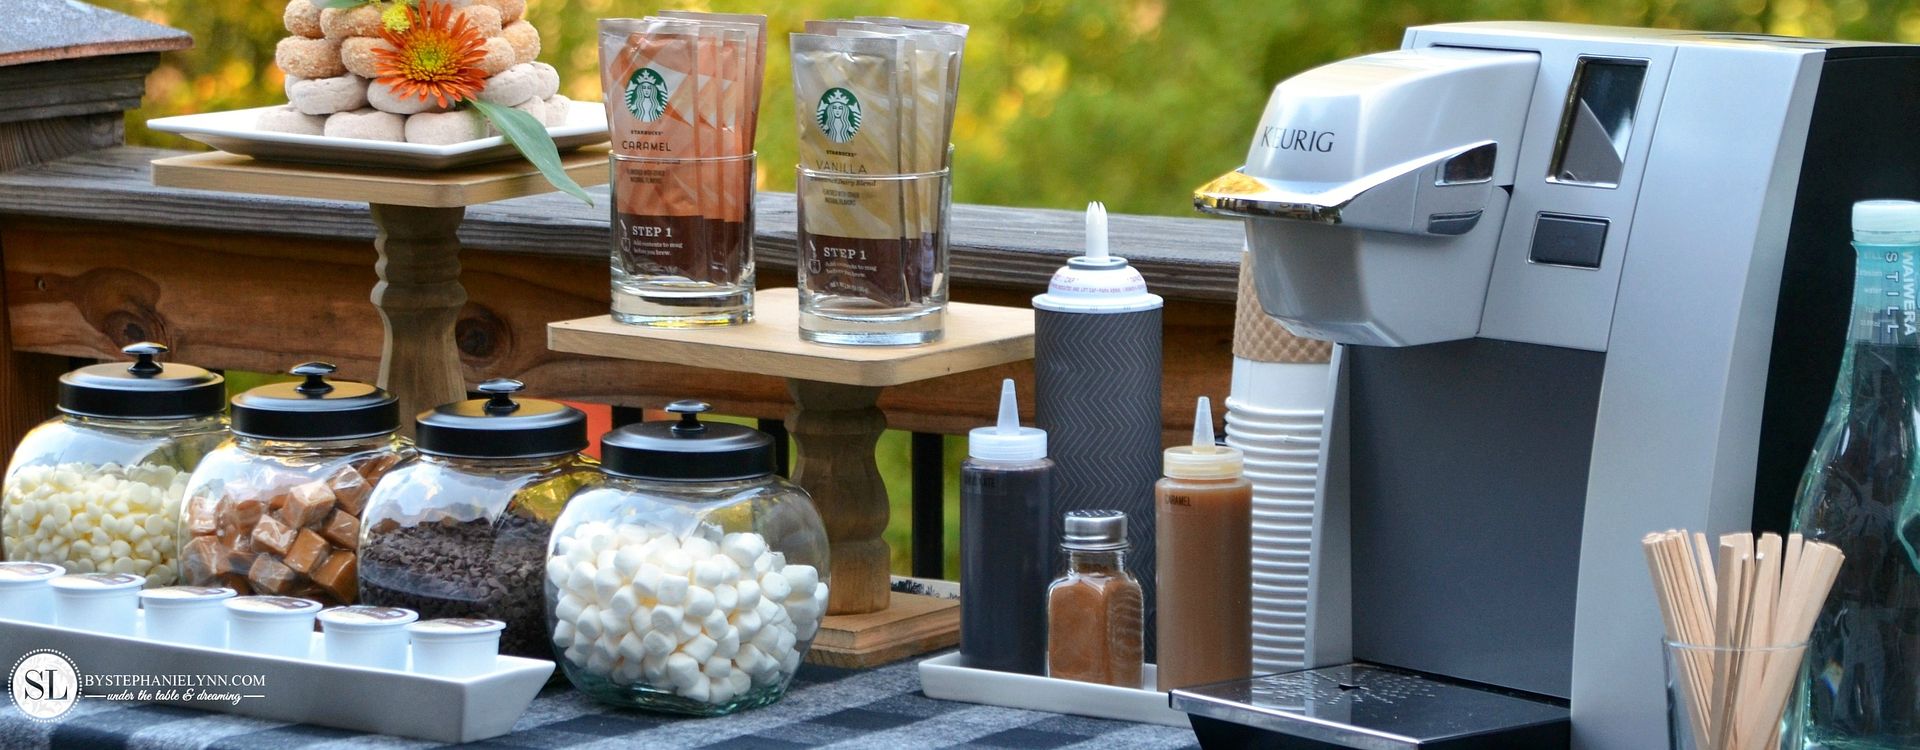 Fall Coffee Bar | coffee & crafts crafting party #StarbucksCaffeLatte #MyStarbucksatHome